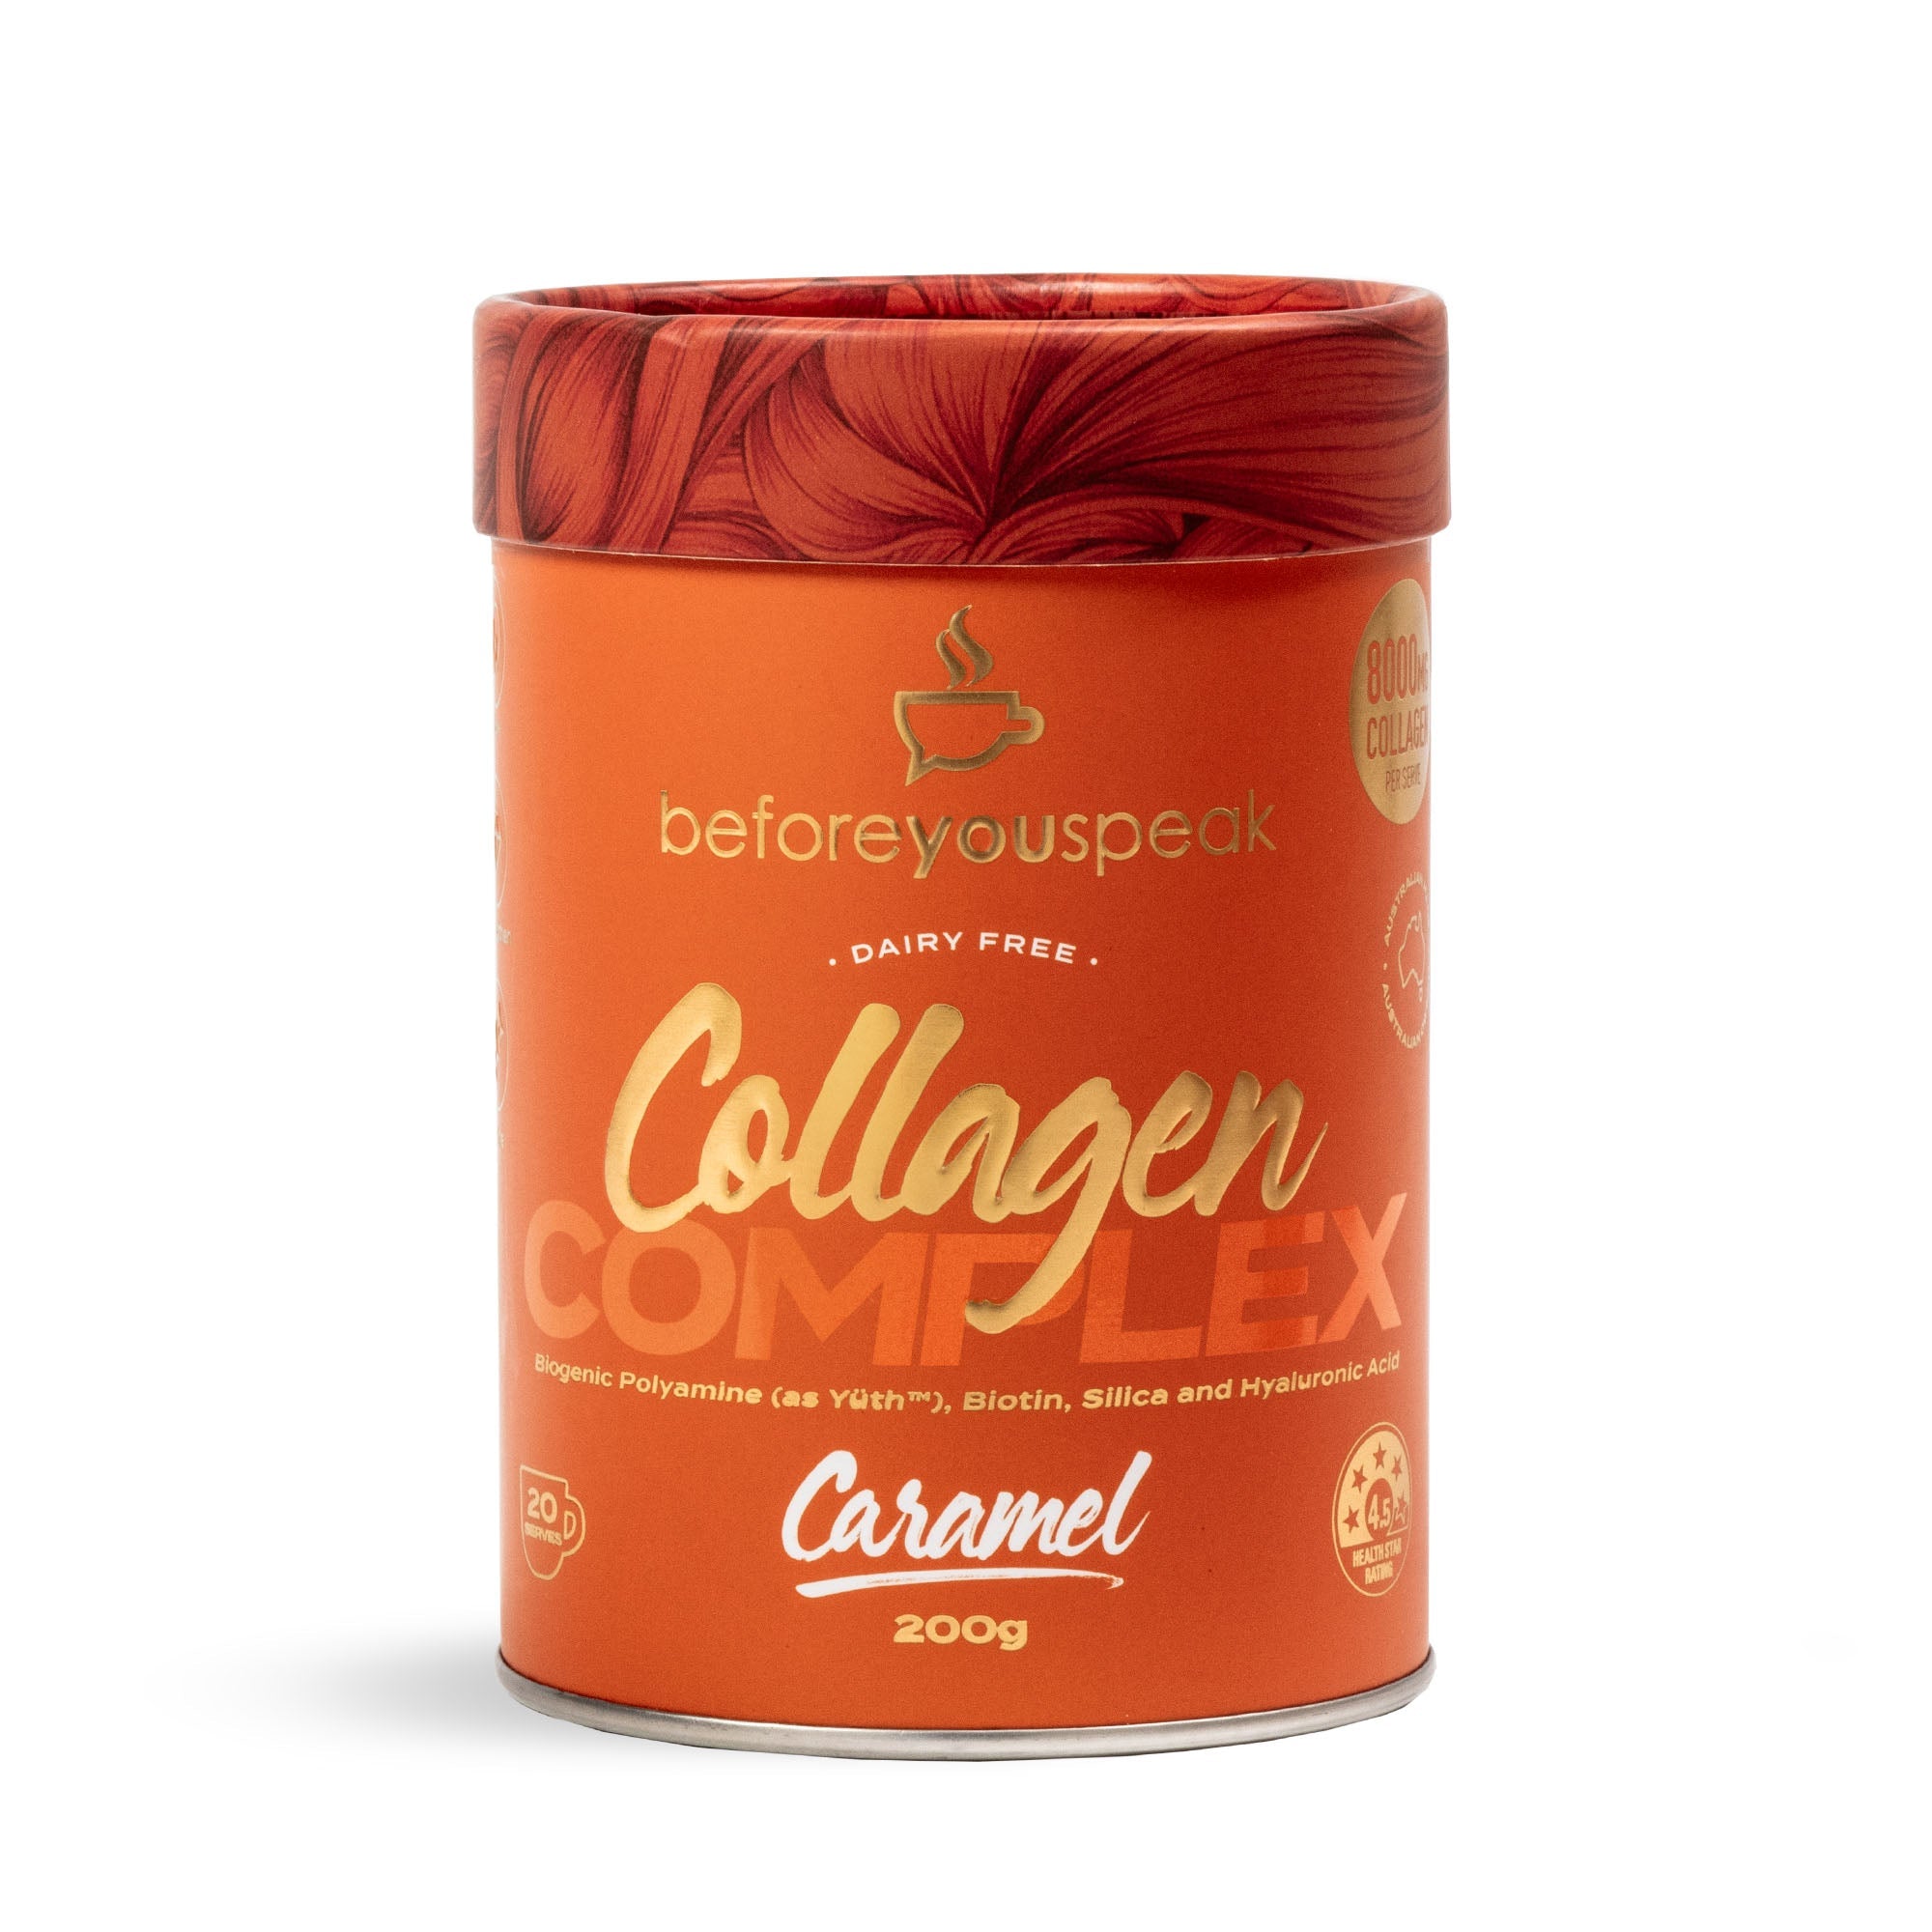 Collagen Complex Caramel - Exquisite Laser Clinic 